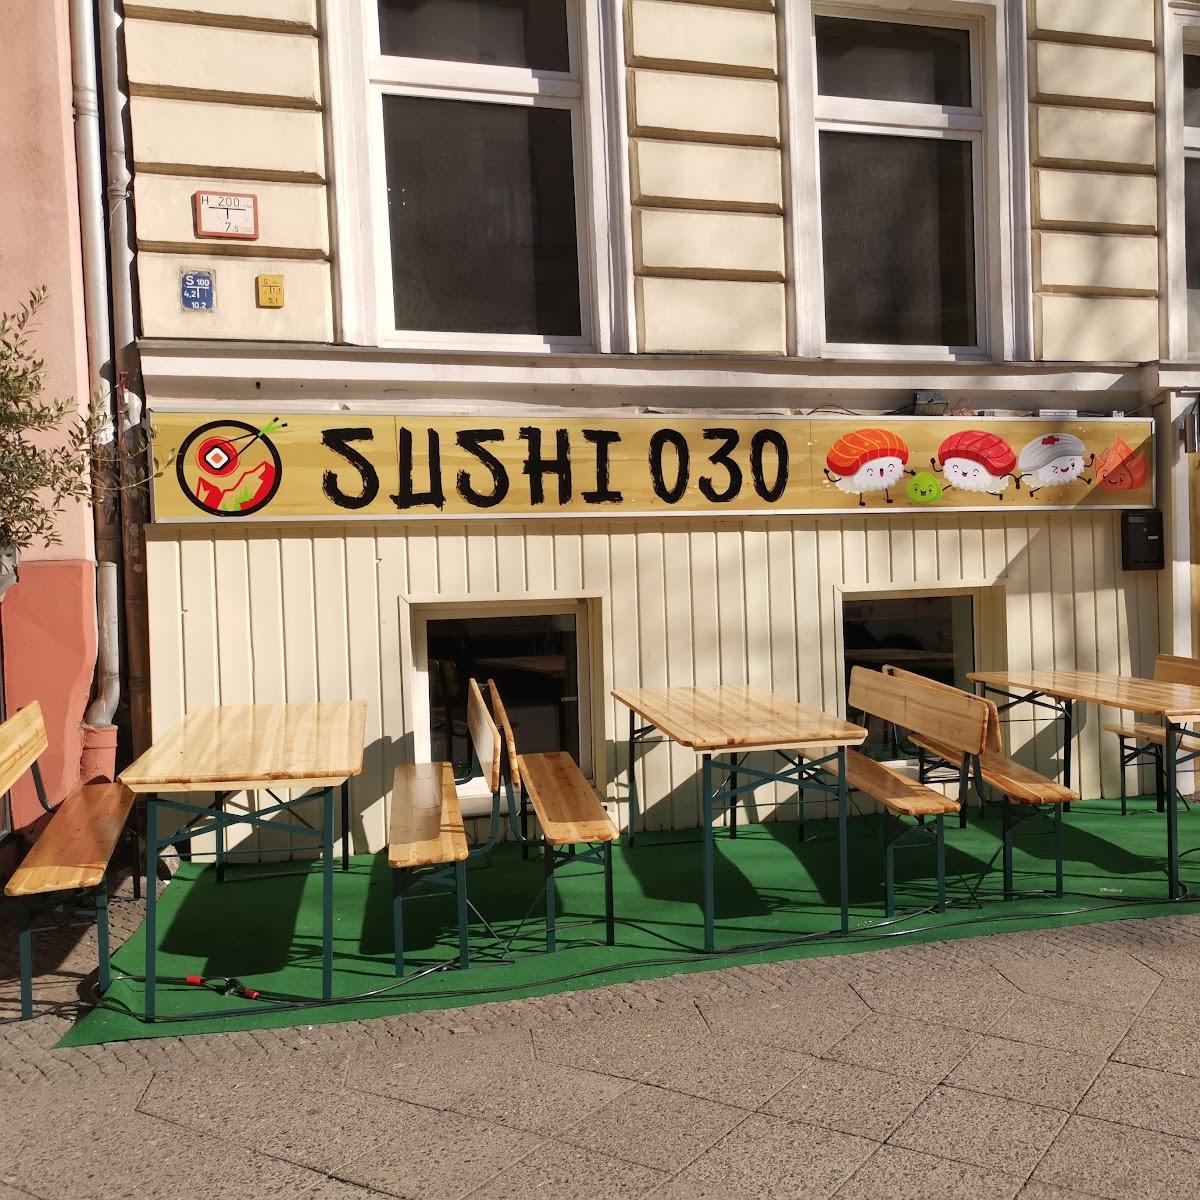 Restaurant "Sushi 030" in Berlin